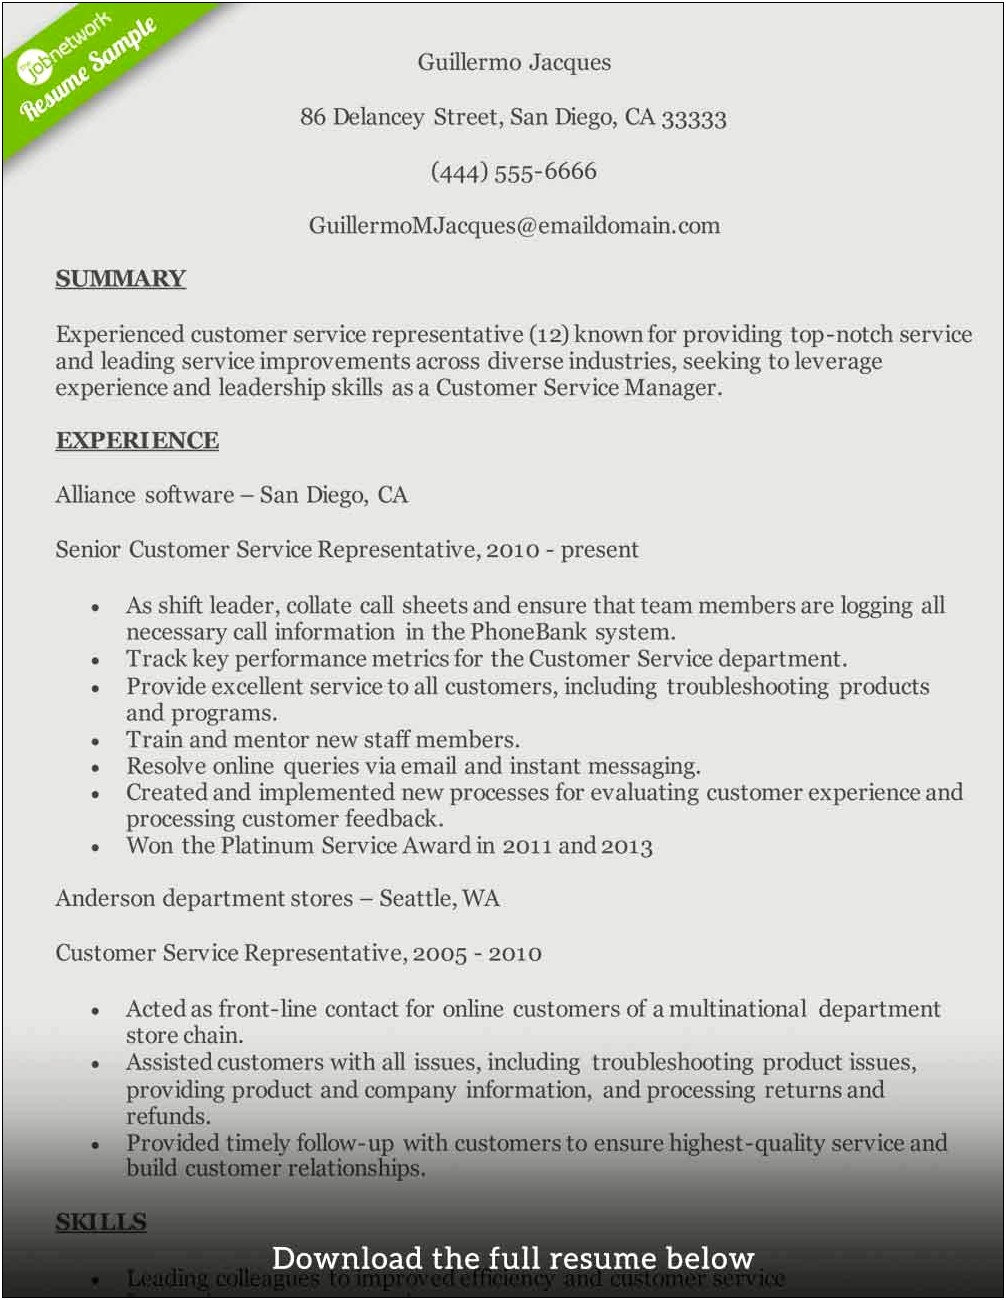 Resume Help For Customer Service Job